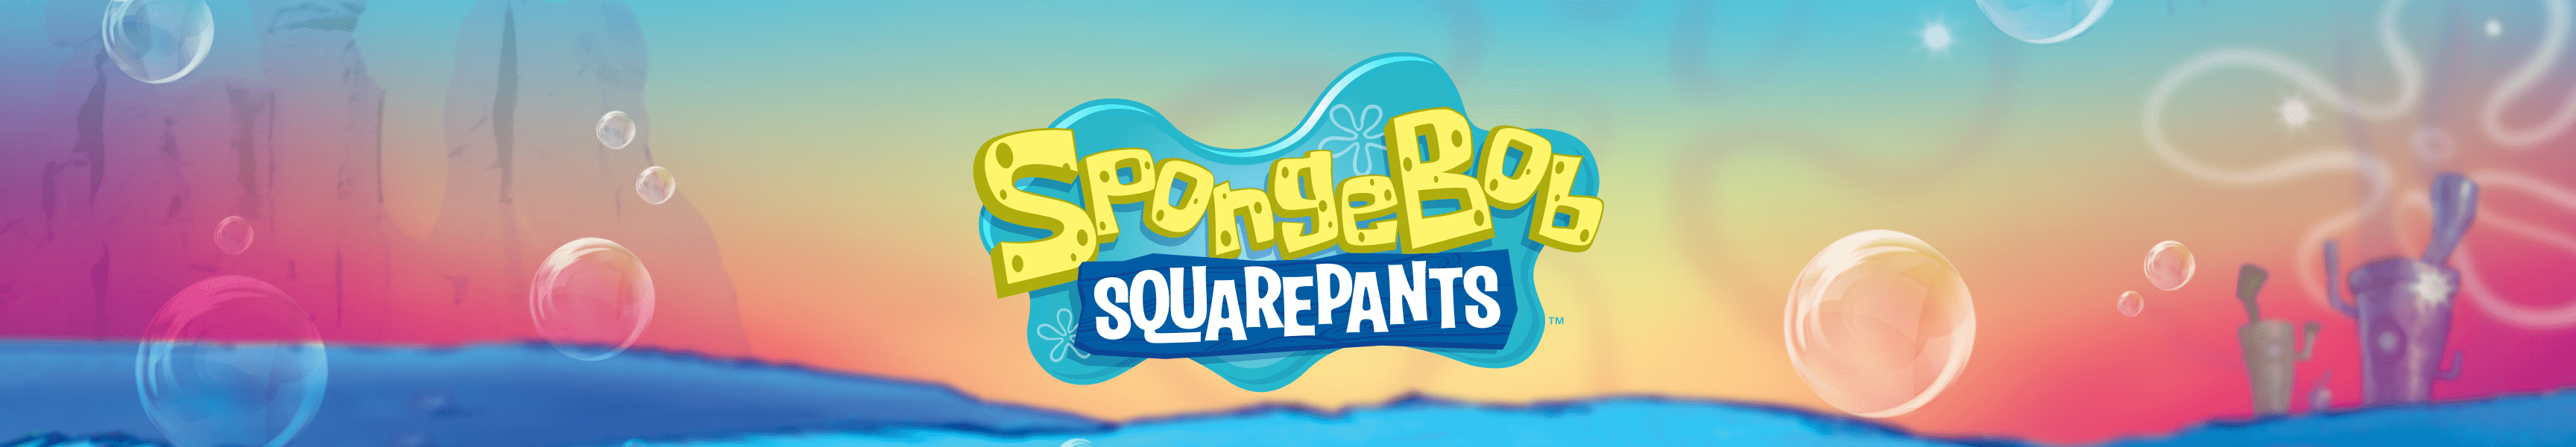 SpongeBob SquarePants Pet Products